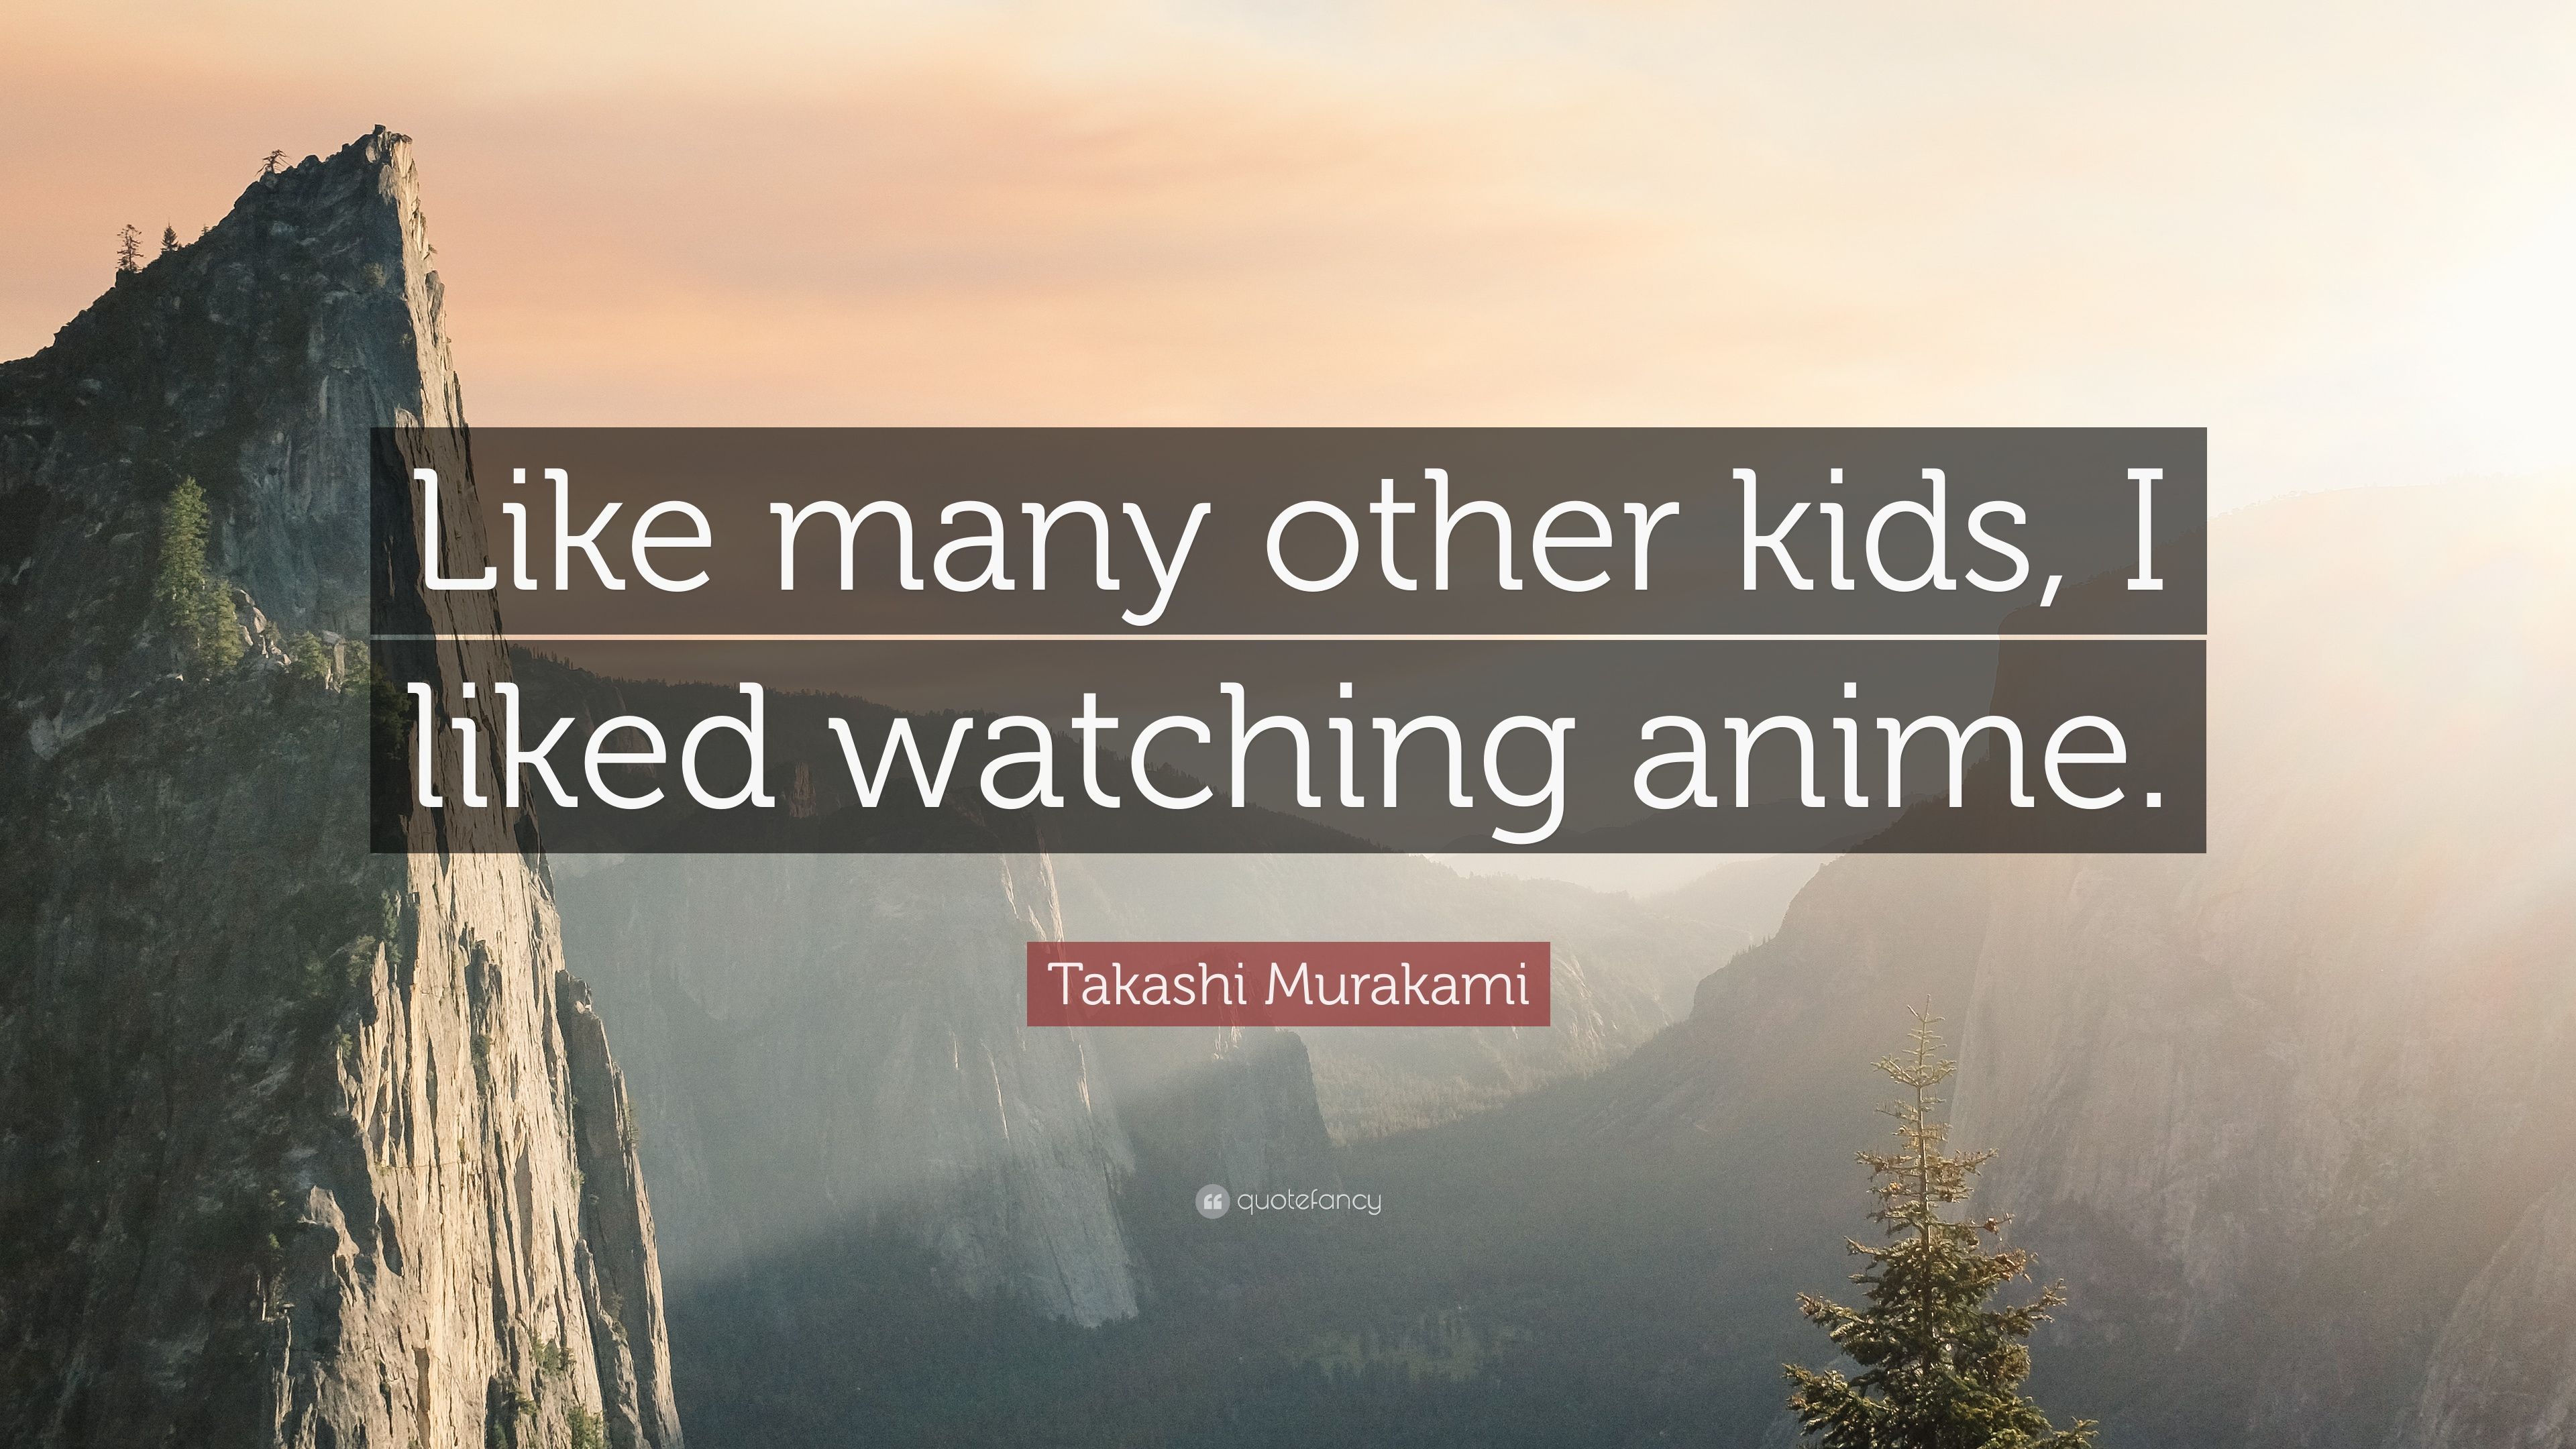 Takashi Murakami Quote: “Like many other kids, I liked watching